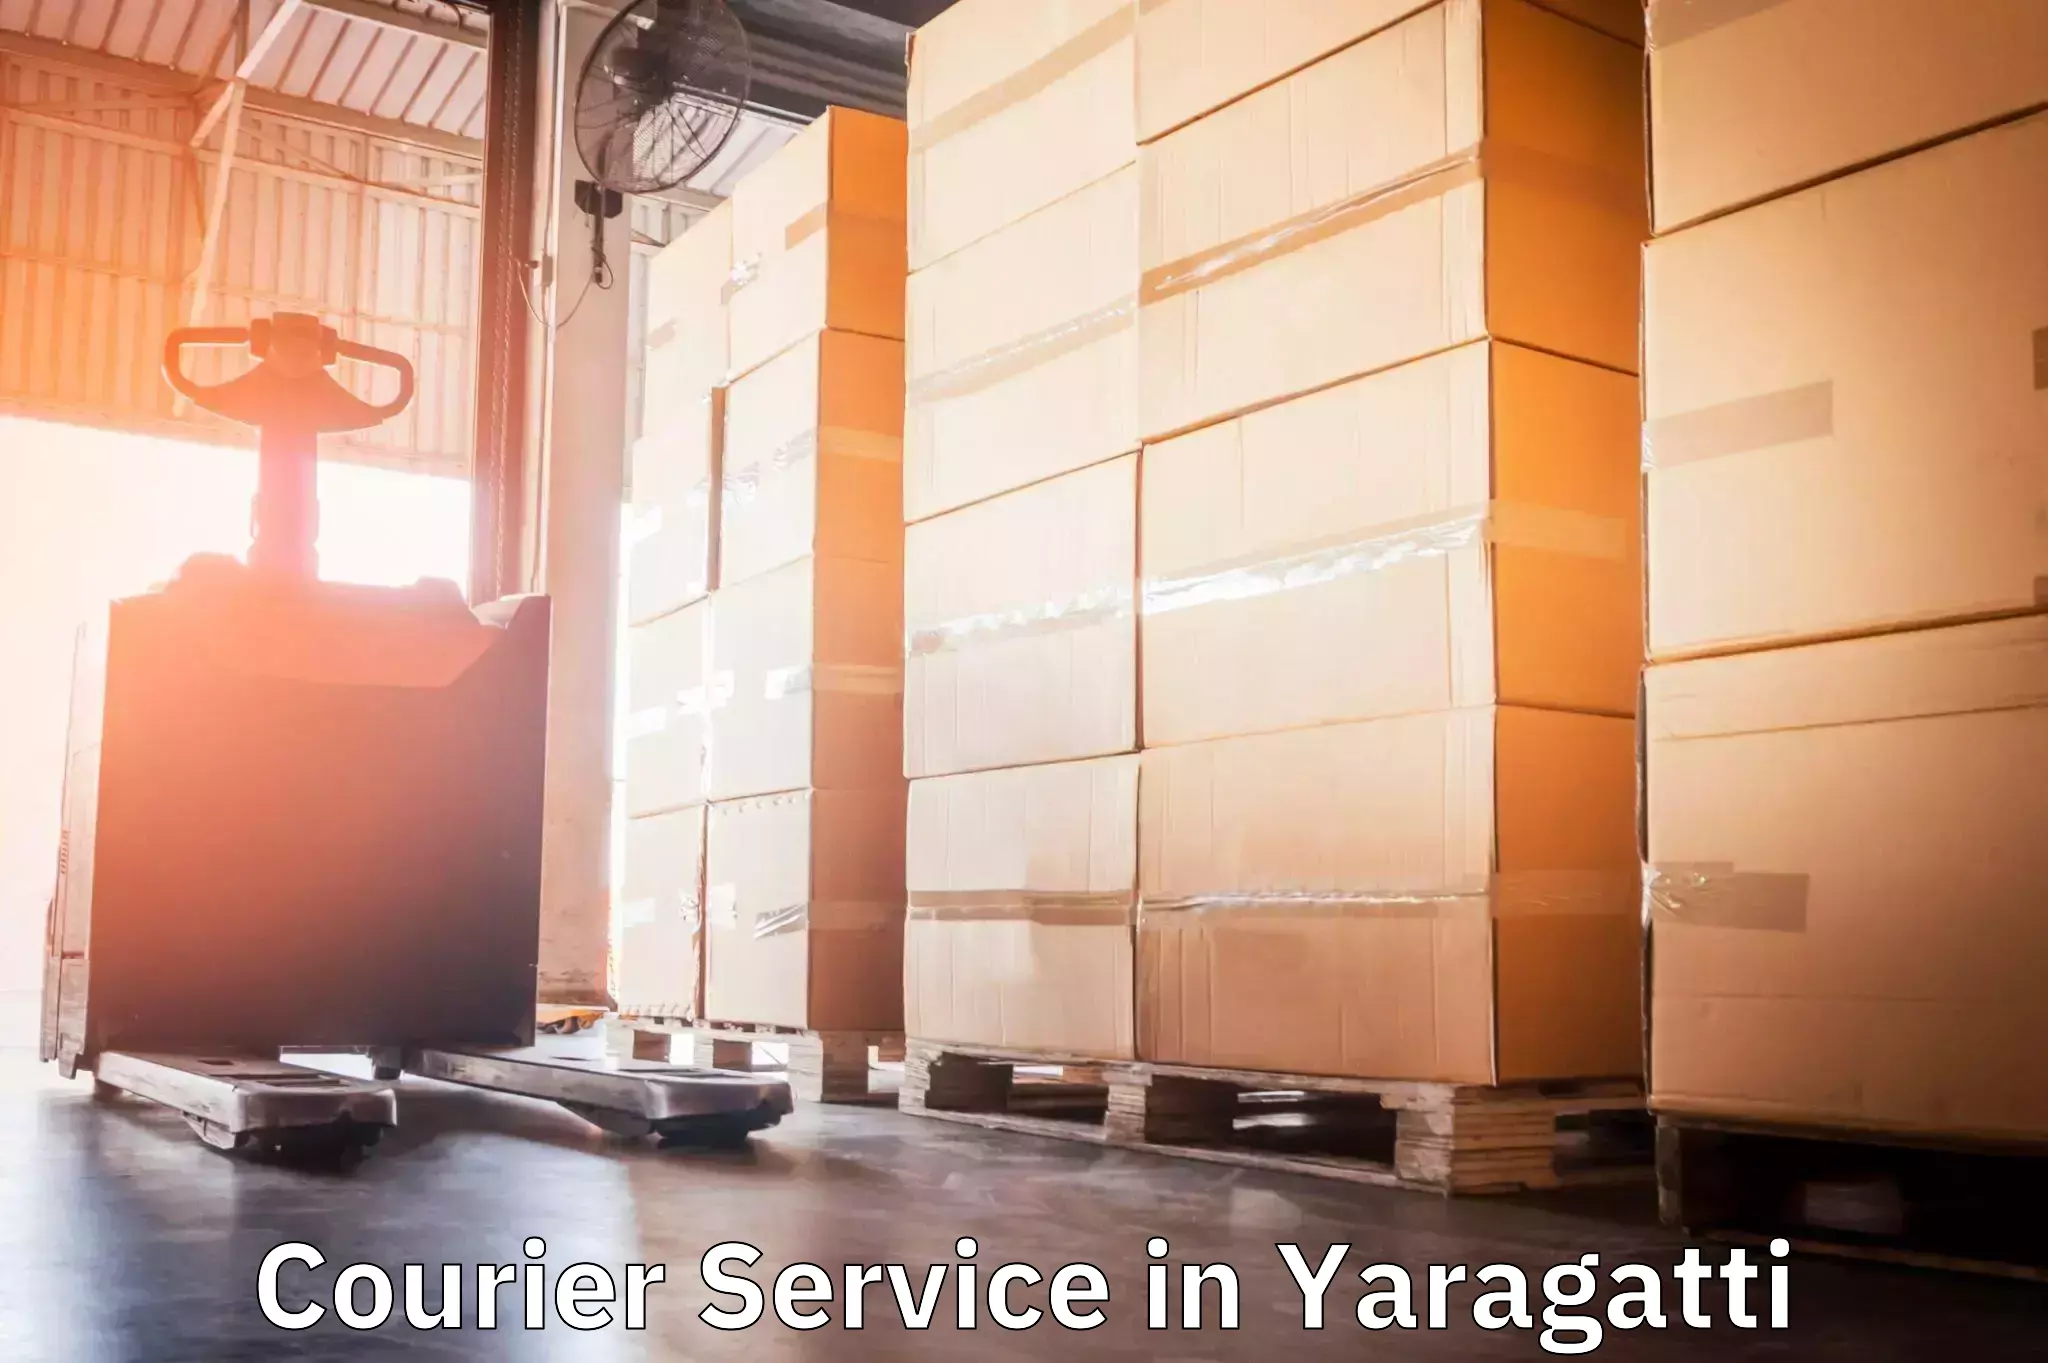 Global shipping networks in Yaragatti